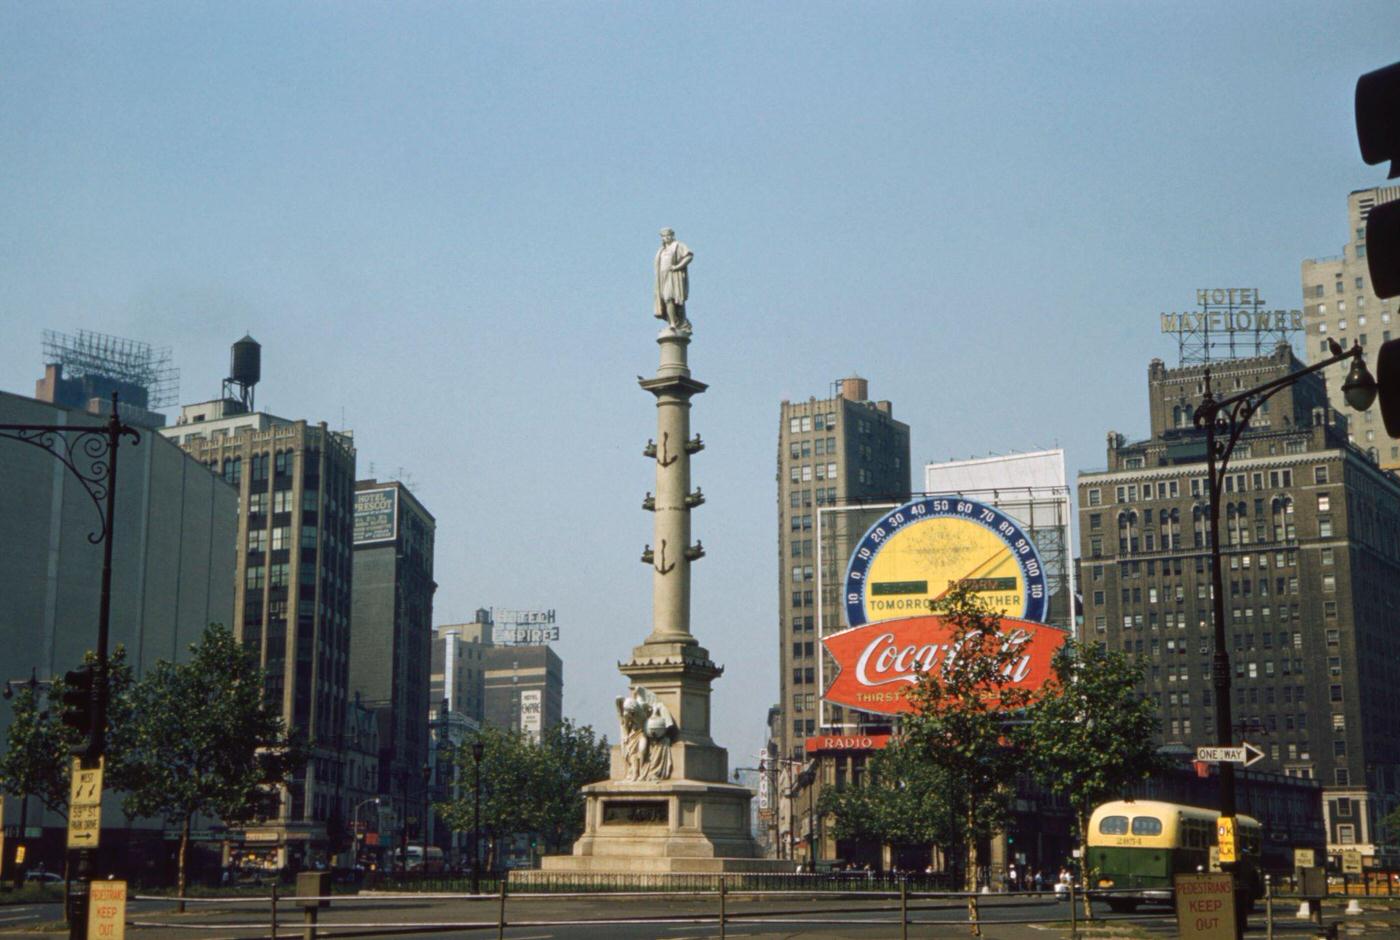 Columbus Circle, Manhattan, 1961